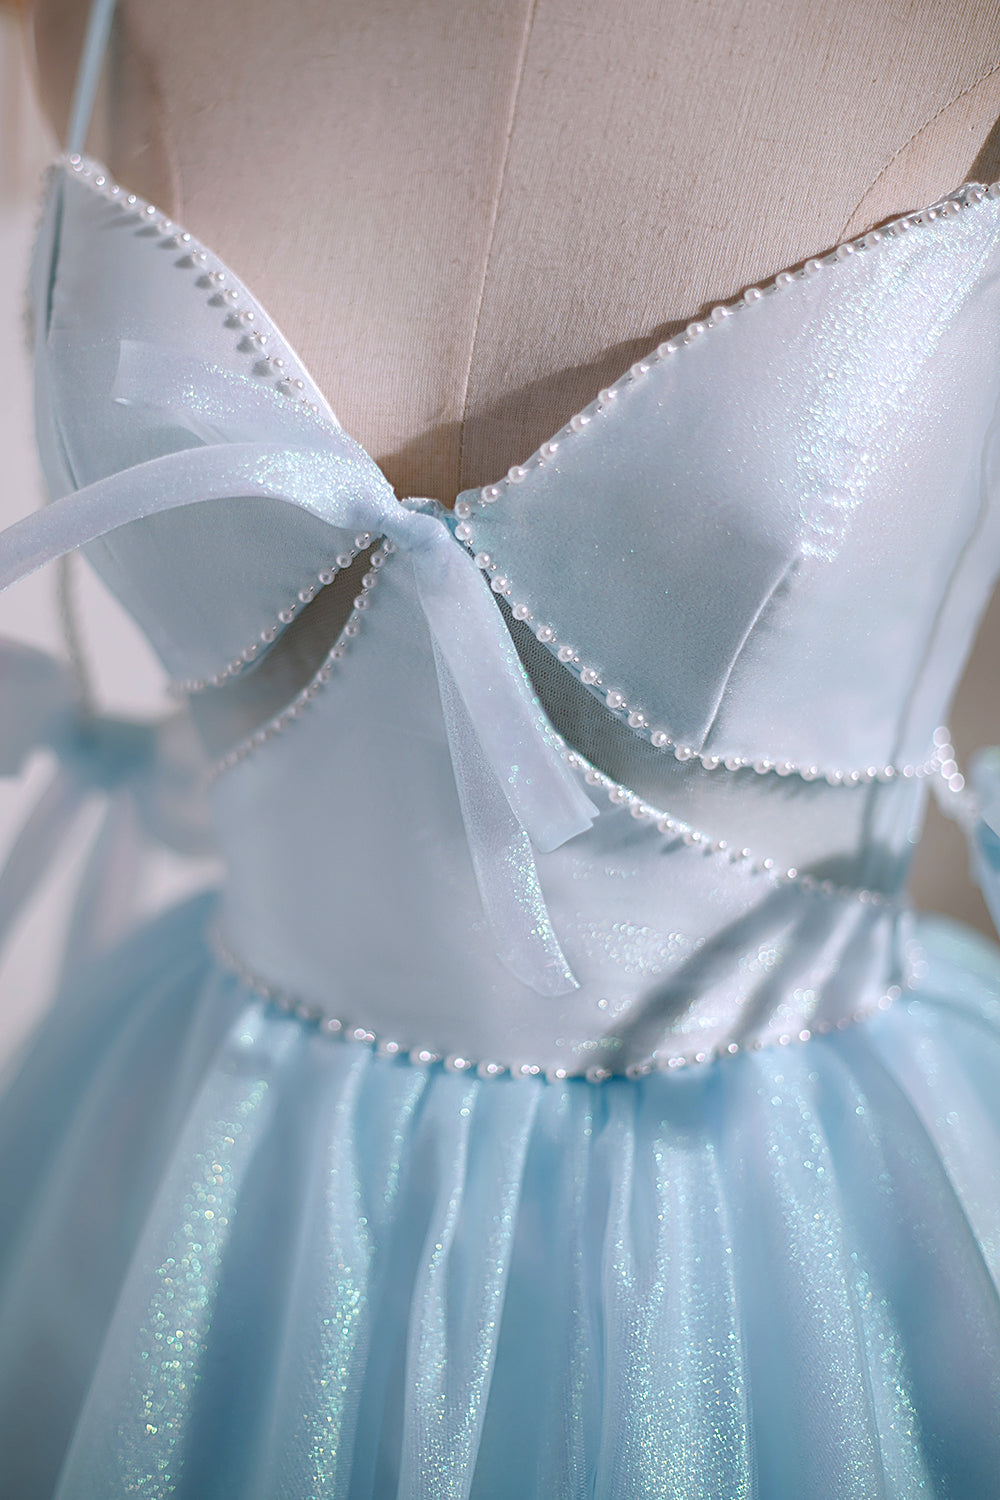 Short Mini Cute Sky Blue Spaghetti Straps Party Dress Disney  Homecoming Dress